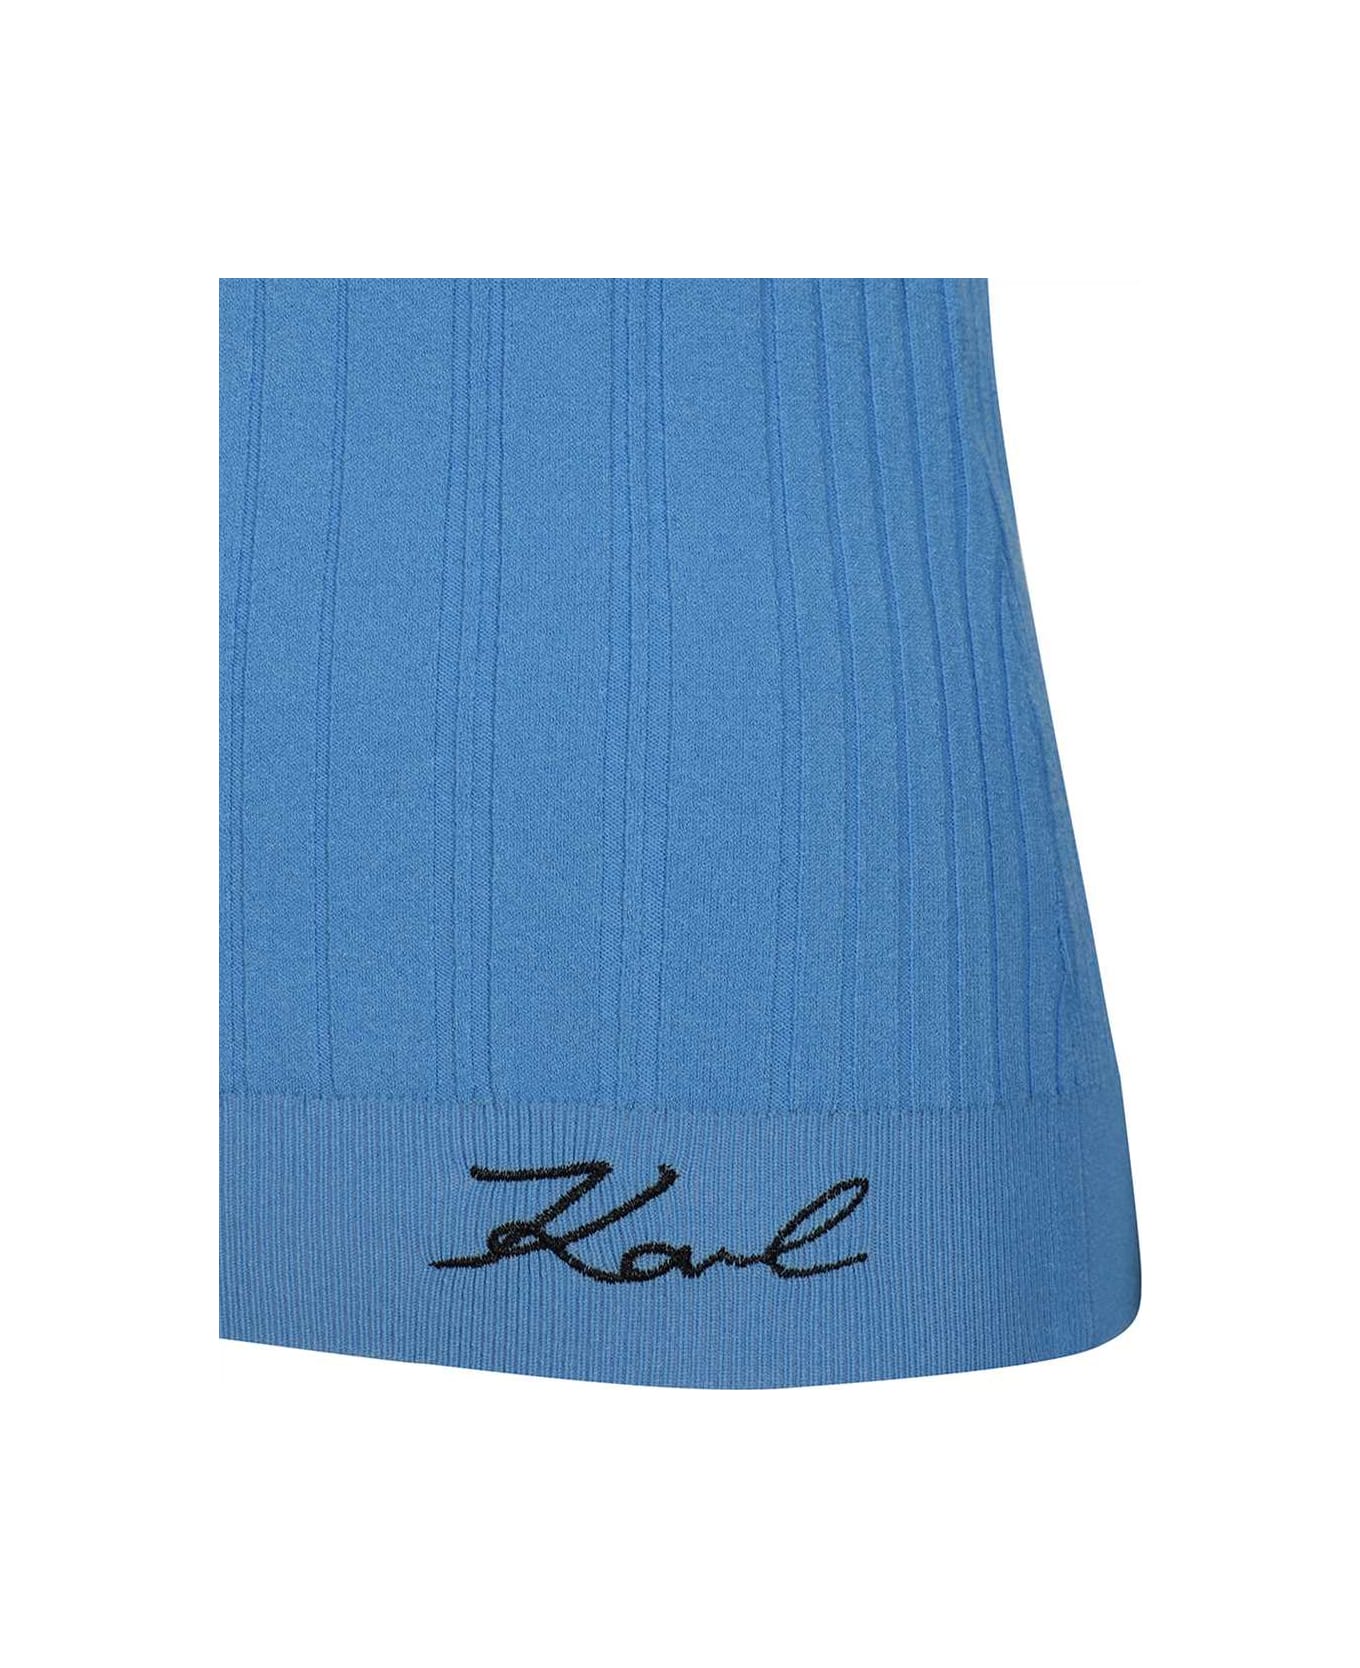 Karl Lagerfeld Viscose Top - blue Tシャツ